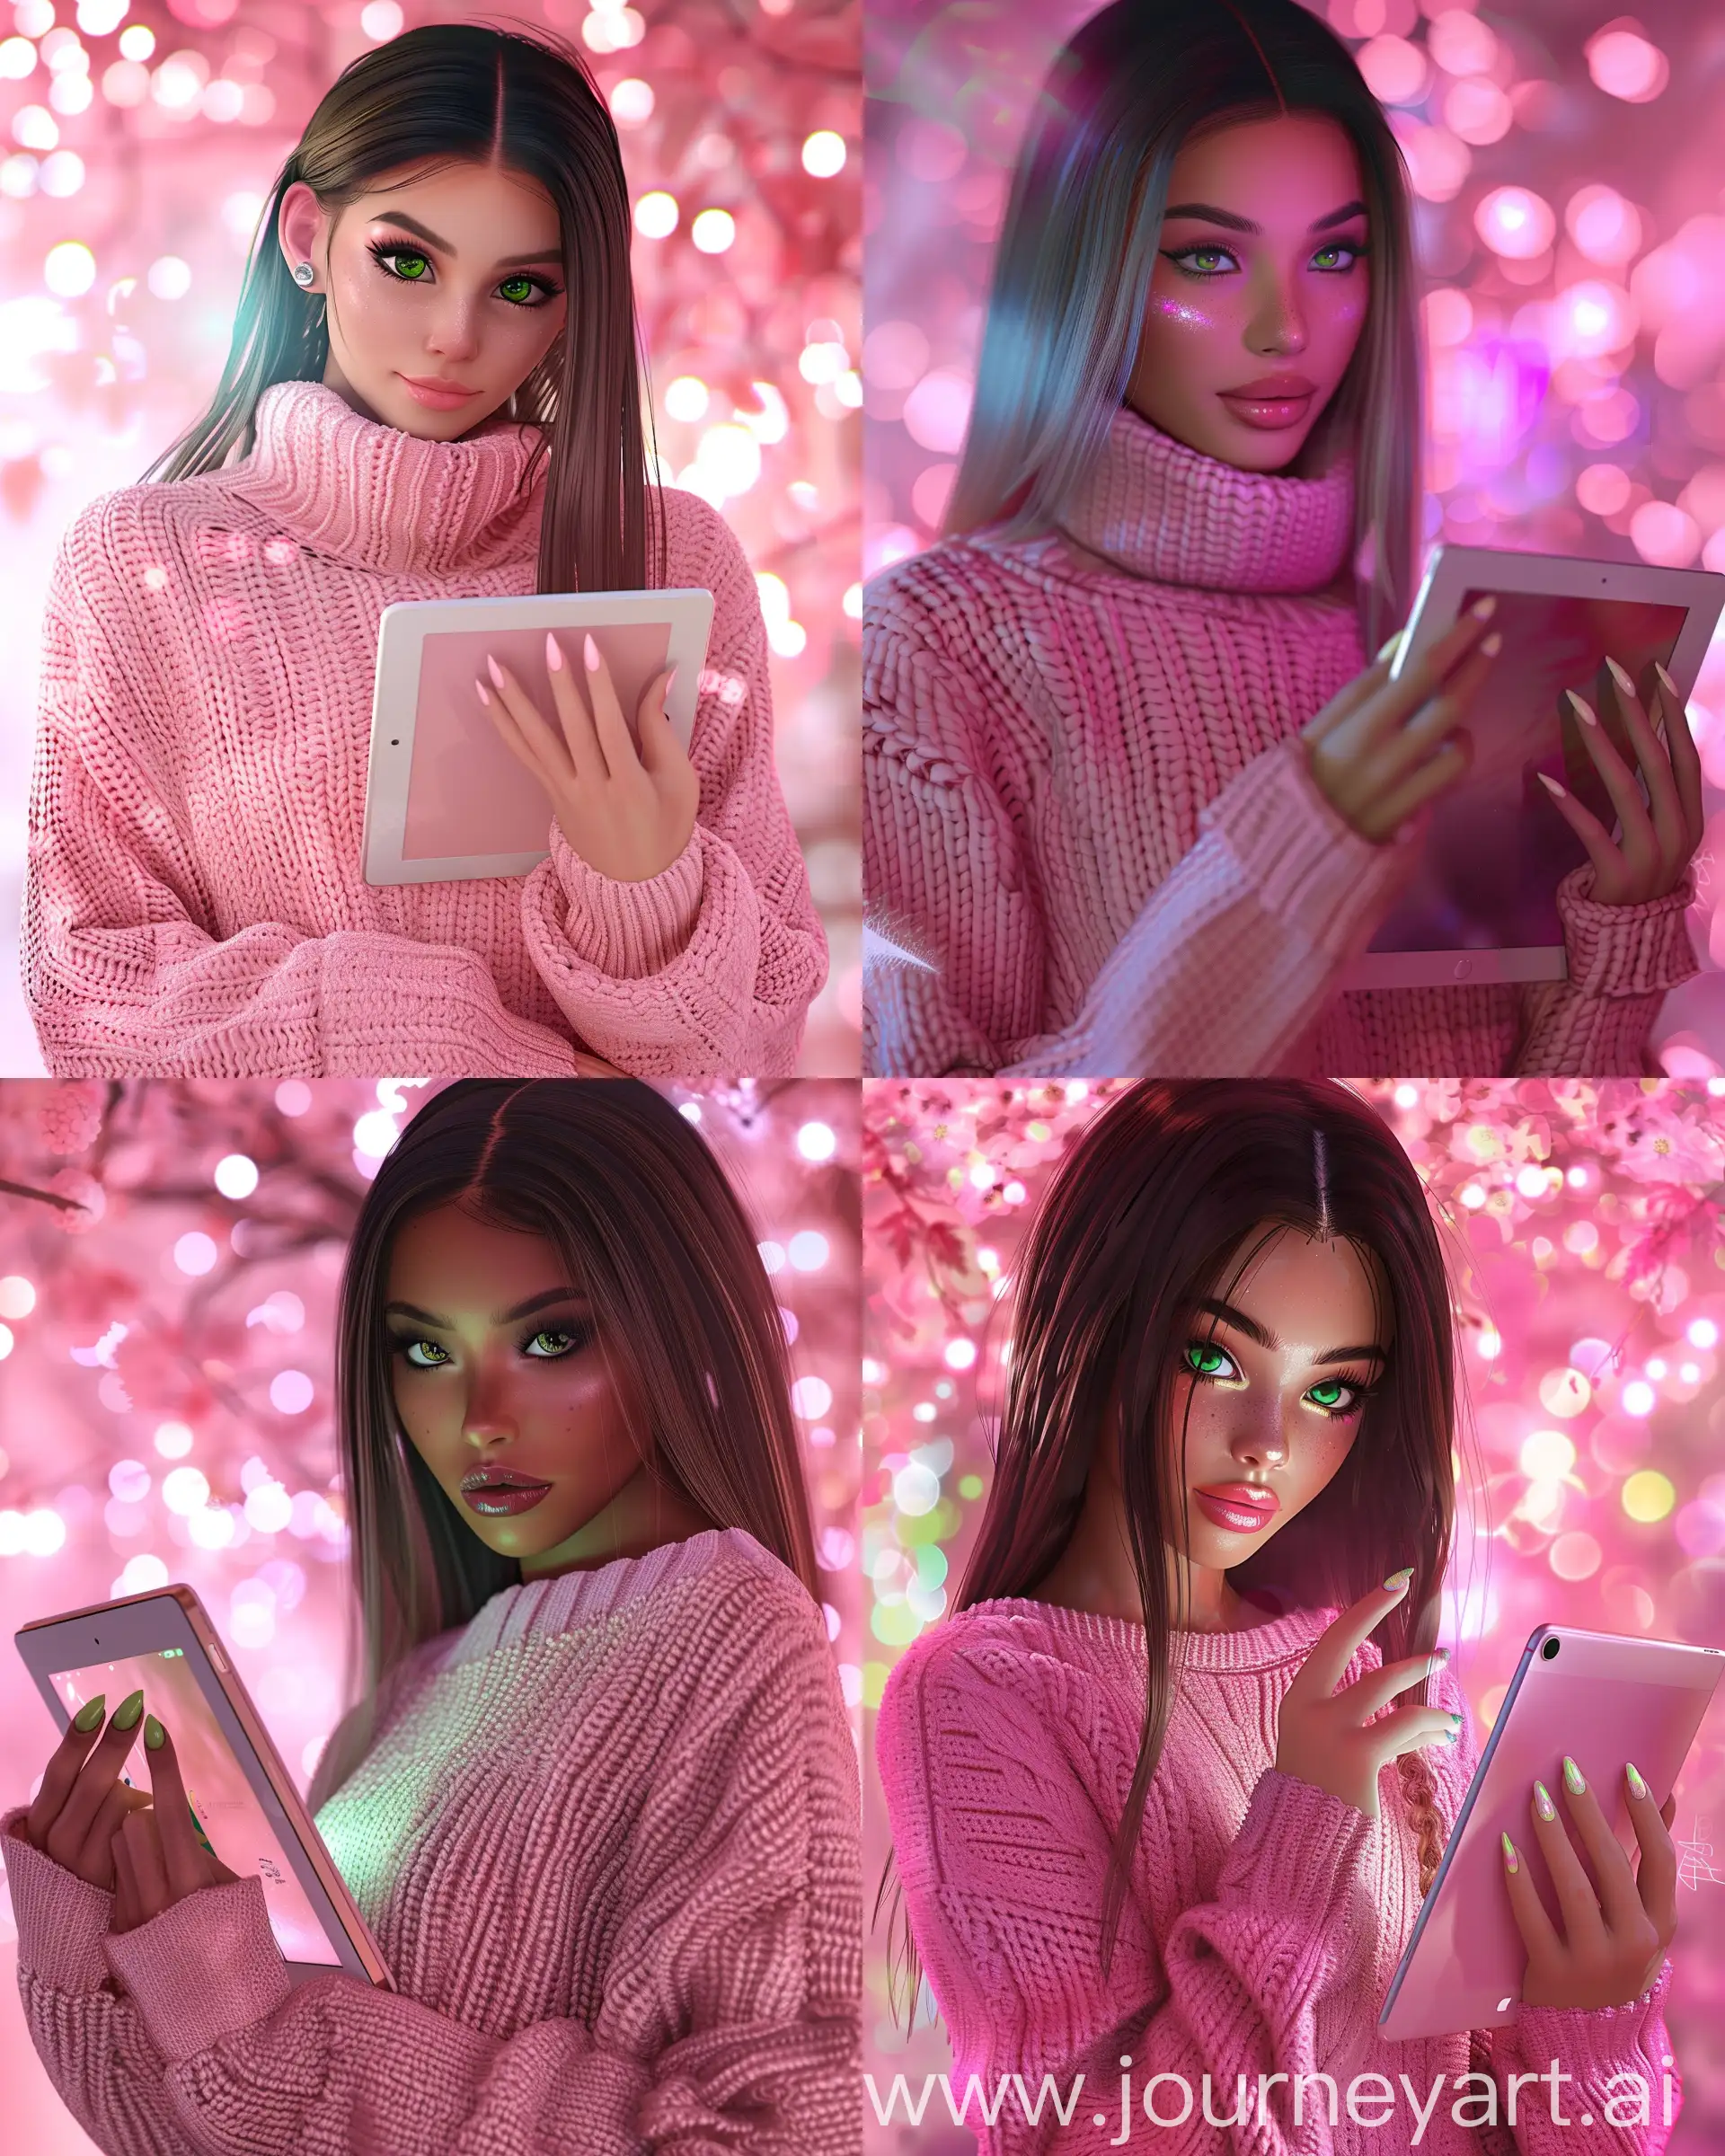 Girl-in-Pink-Sweater-with-iPad-in-Beautiful-Pink-Light